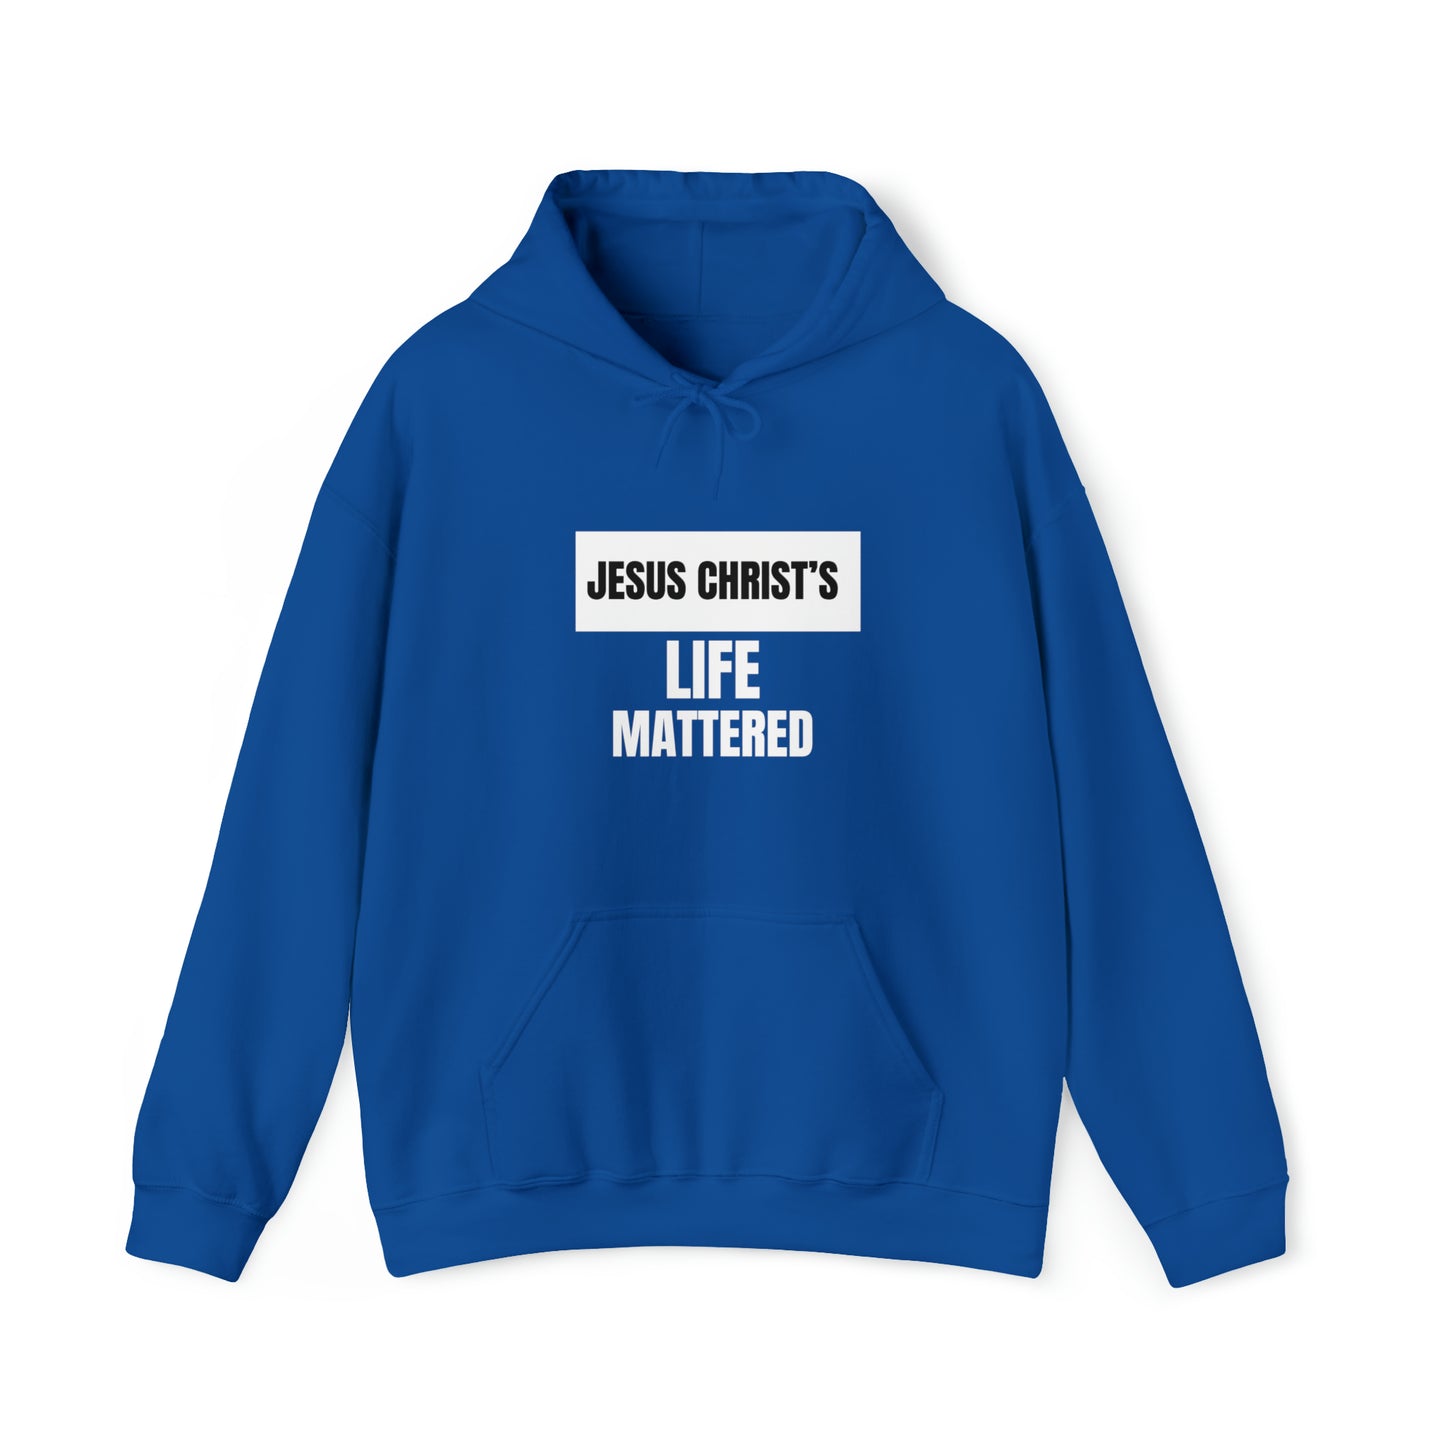 Jesus Christ's Life Mattered Unisex Hooded Sweatshirt